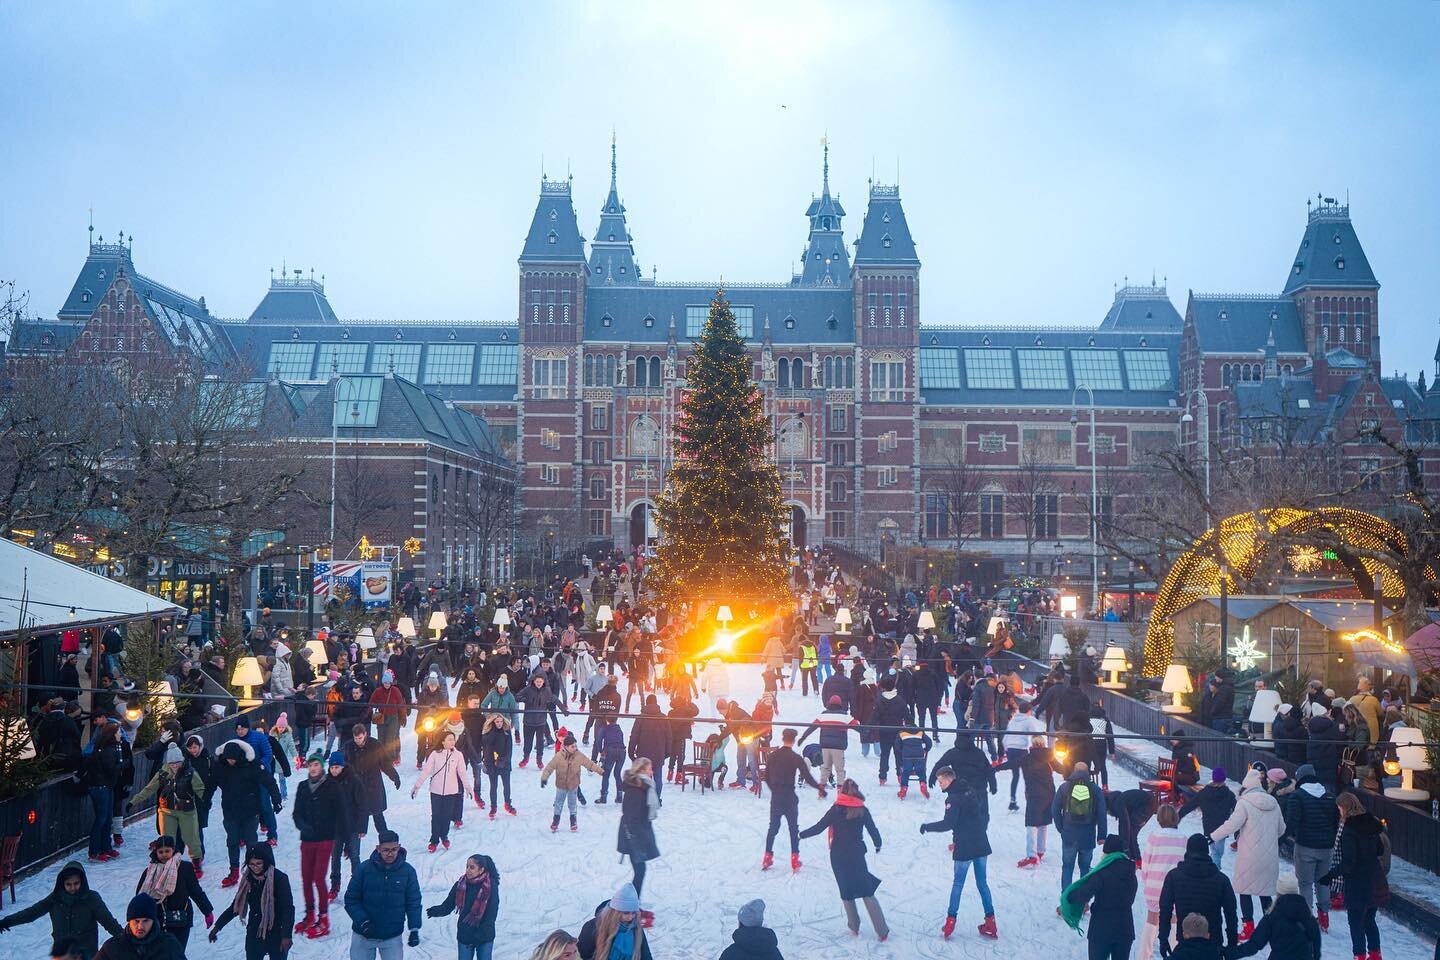 Festive vibes in the DAM✨⛄️🎄❄️
.
.
.
.
.
.
.
.
.
.
.
.
.
.
.
.
.
#rijksmuseum #amsterdamcity #christmastree #festivevibes #festivevibes✨ #amsterdamphotographer #amsterdamphotography #christmastime #weshootmirrorless #iceskate #sonyphoto #dutch_shoot